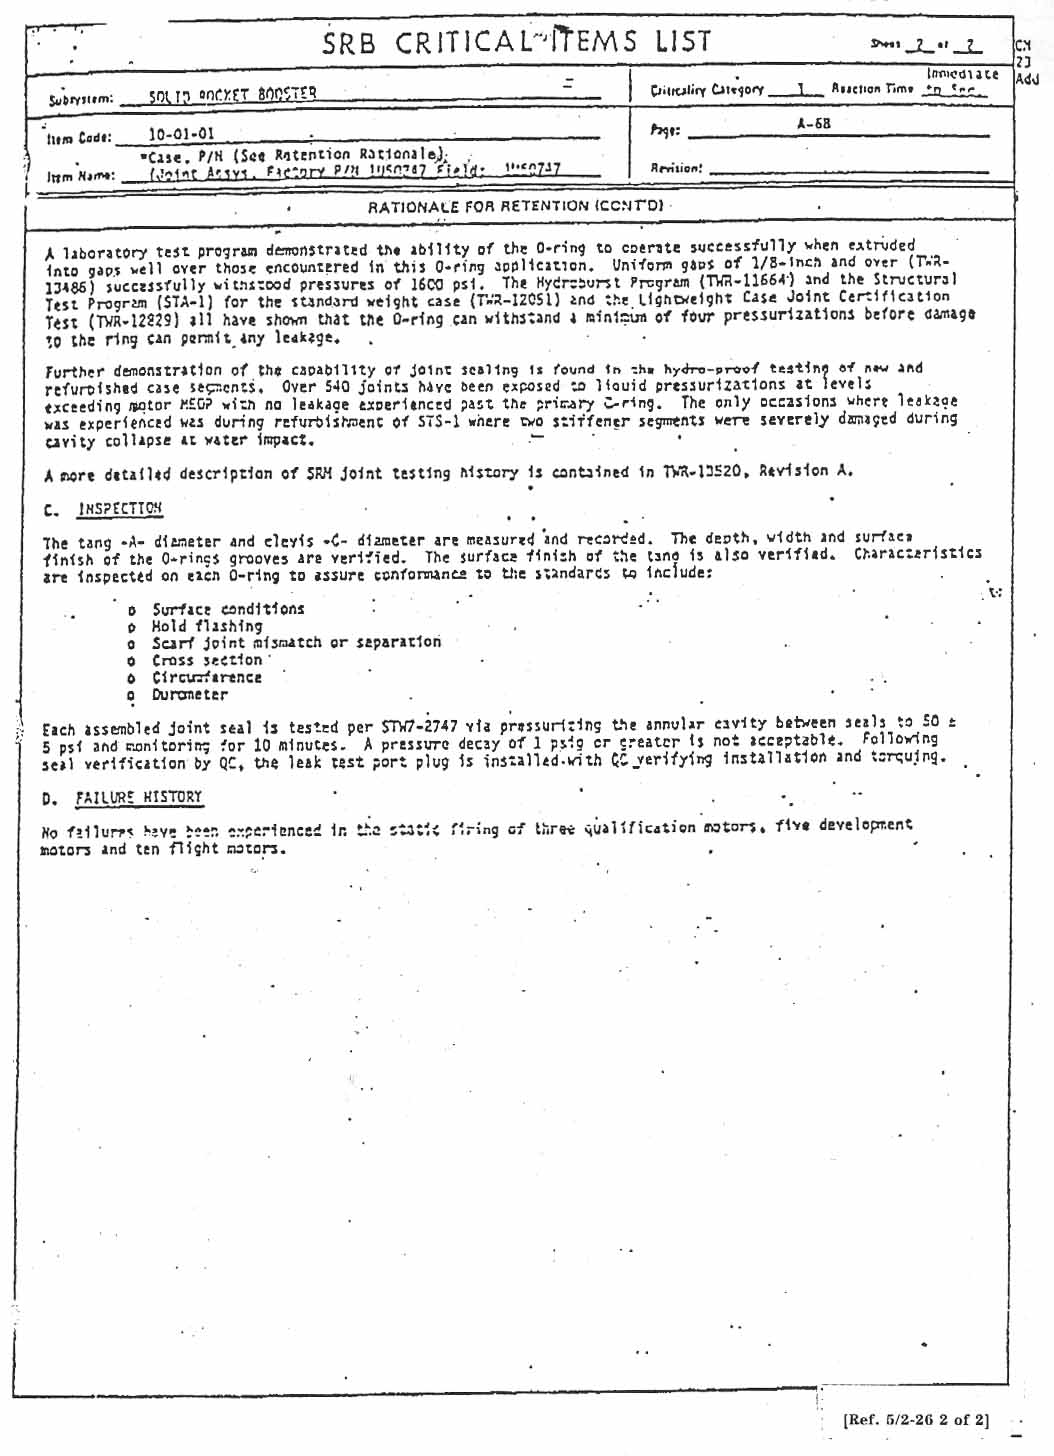 SRB Critical Items List. December 17, 1982. (continued).